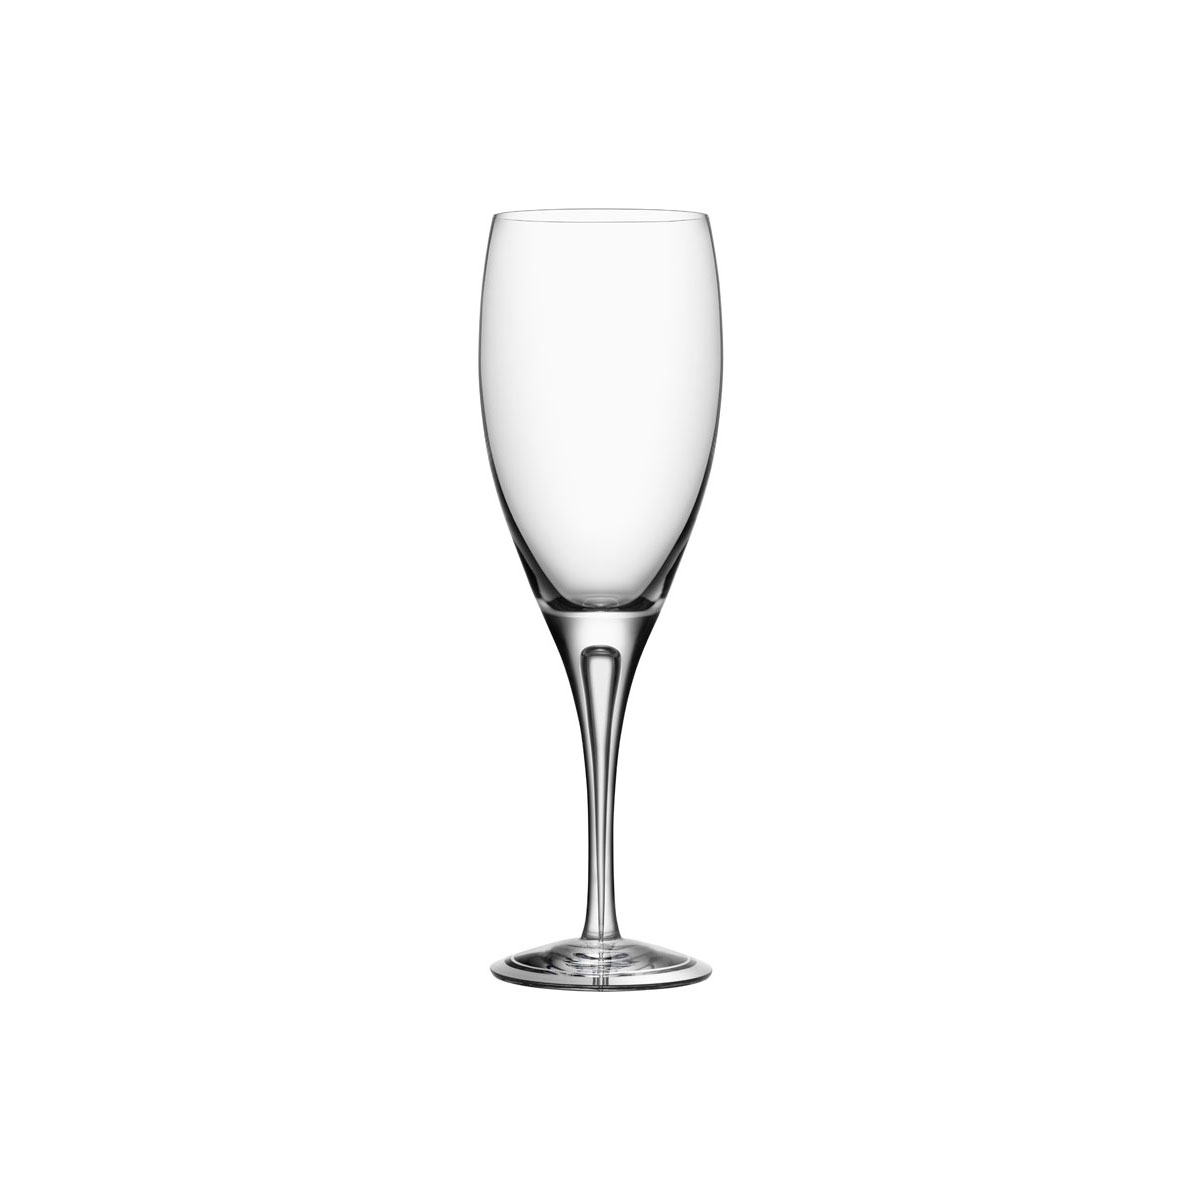 Orrefors Crystal, Intermezzo Air Champagne Crystal Flute, Single